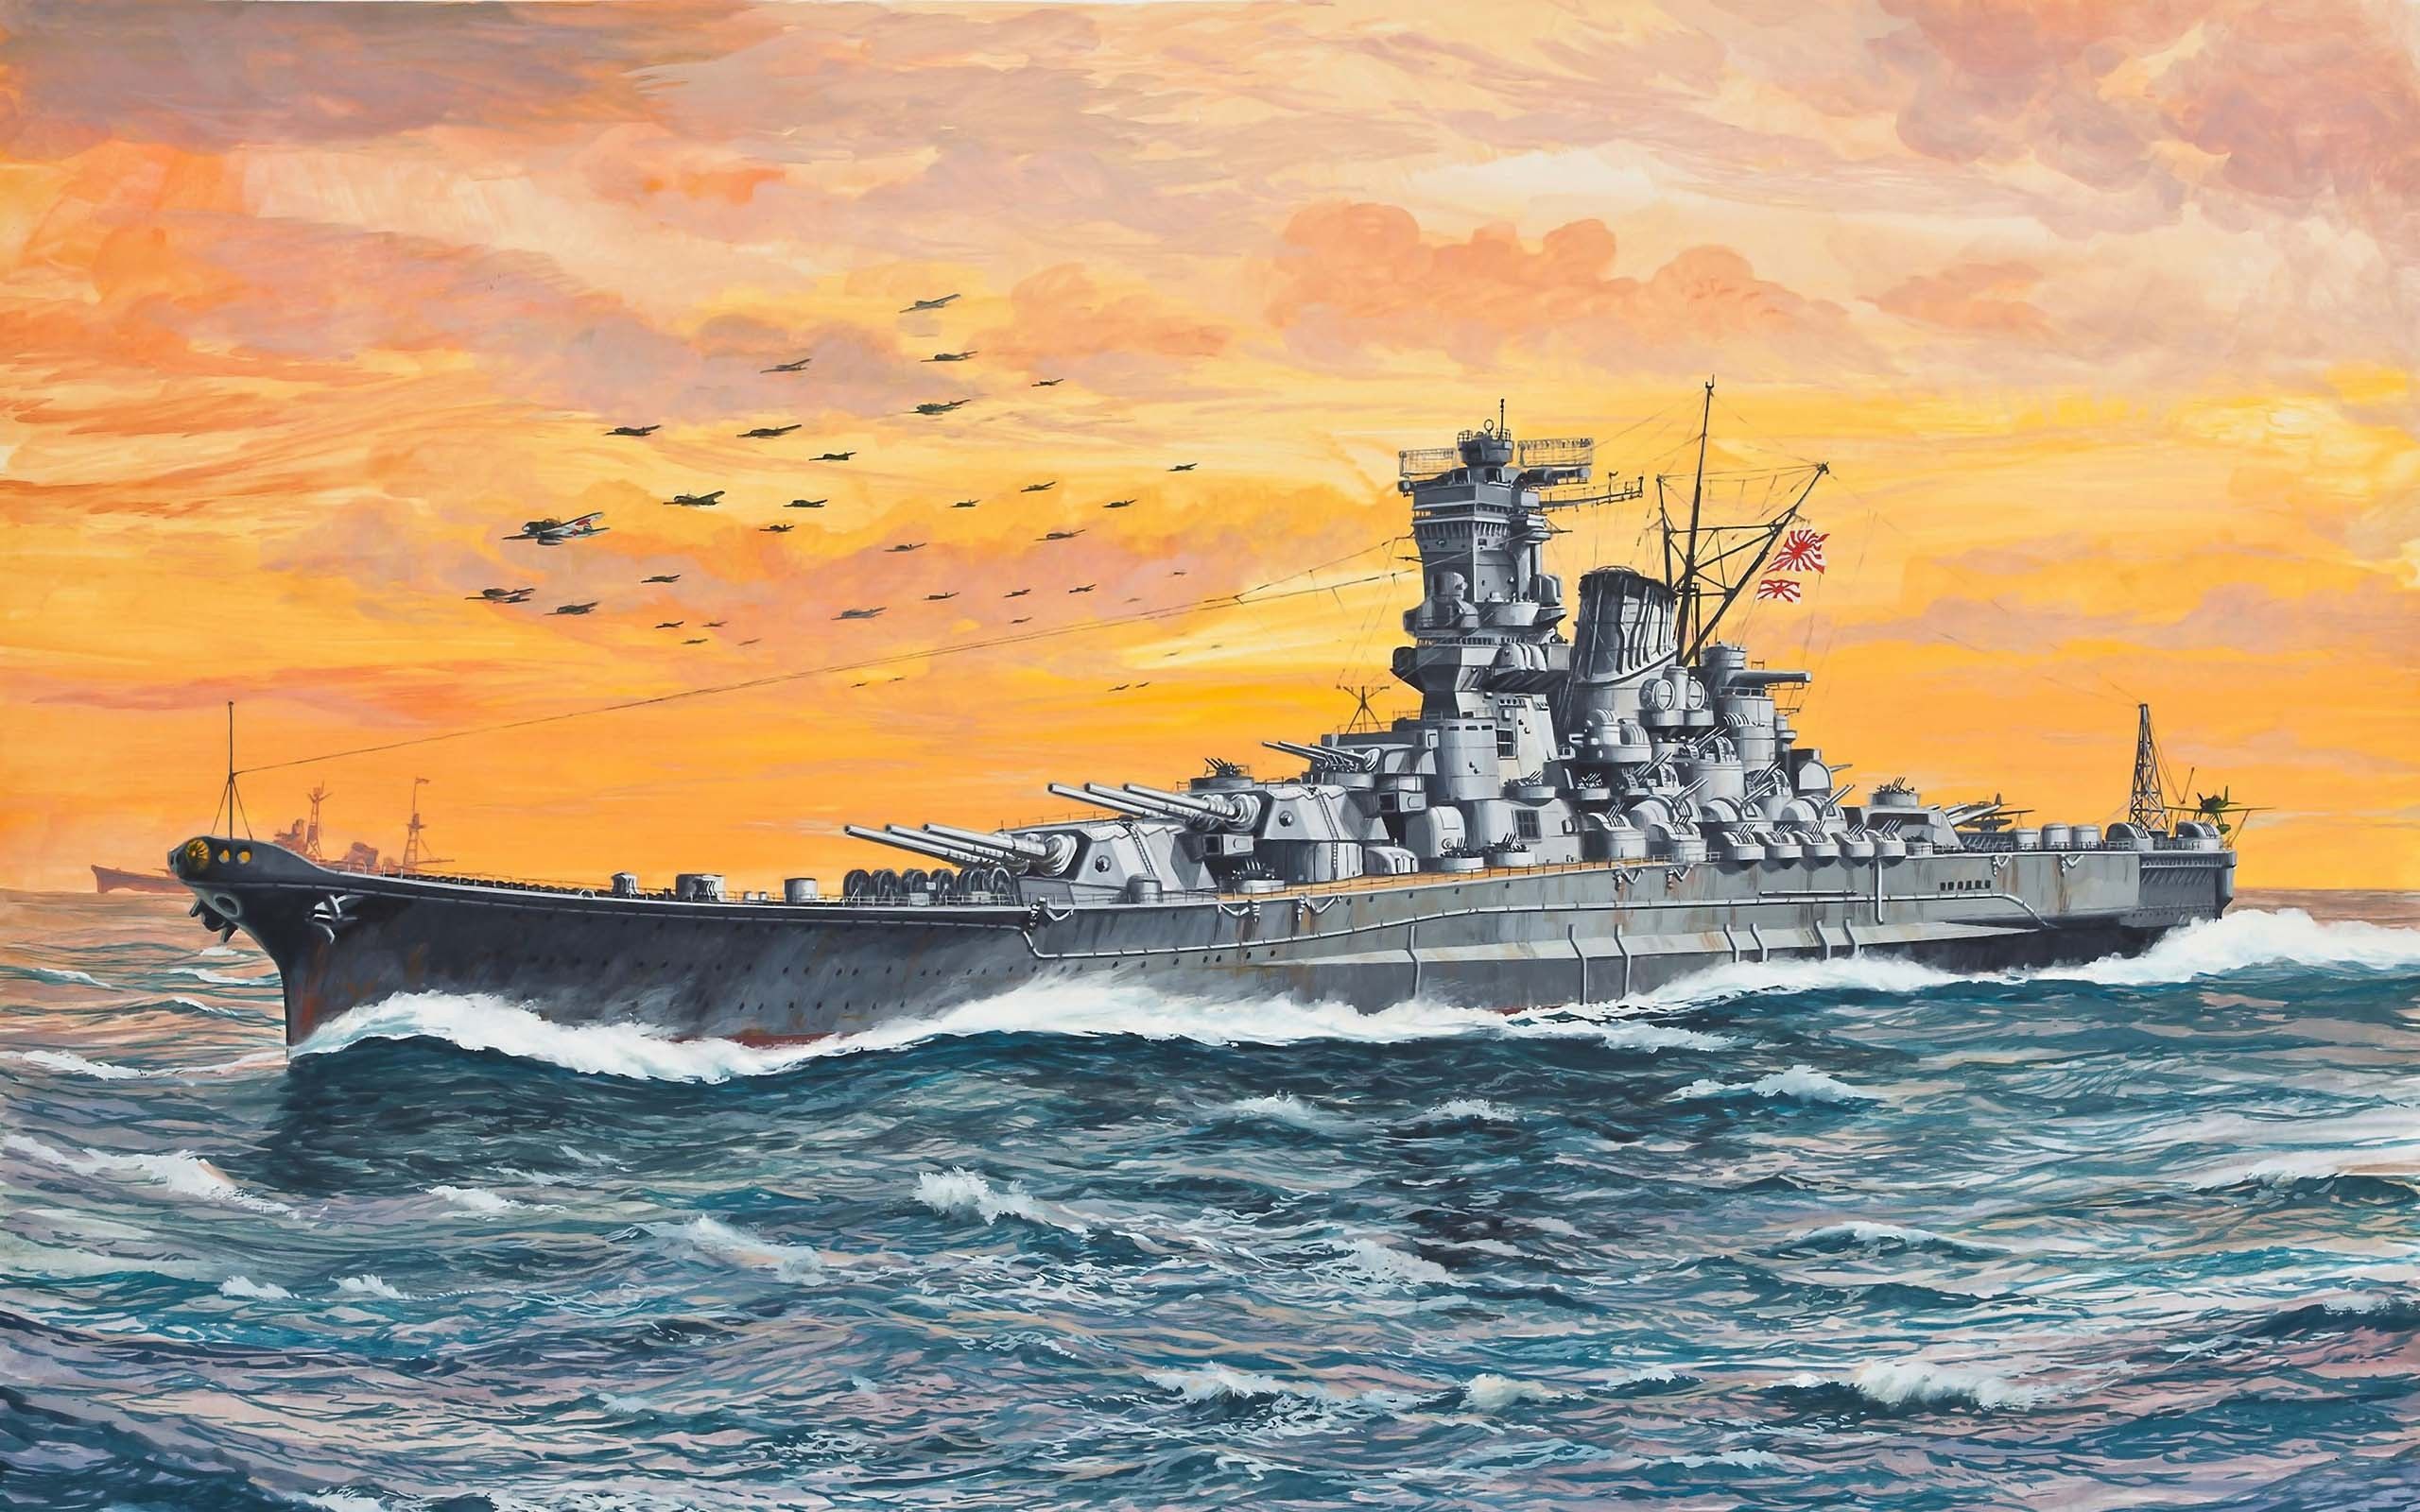 Battleship Yamato Wallpaper. World of warships wallpaper, Ocean painting, Battleship